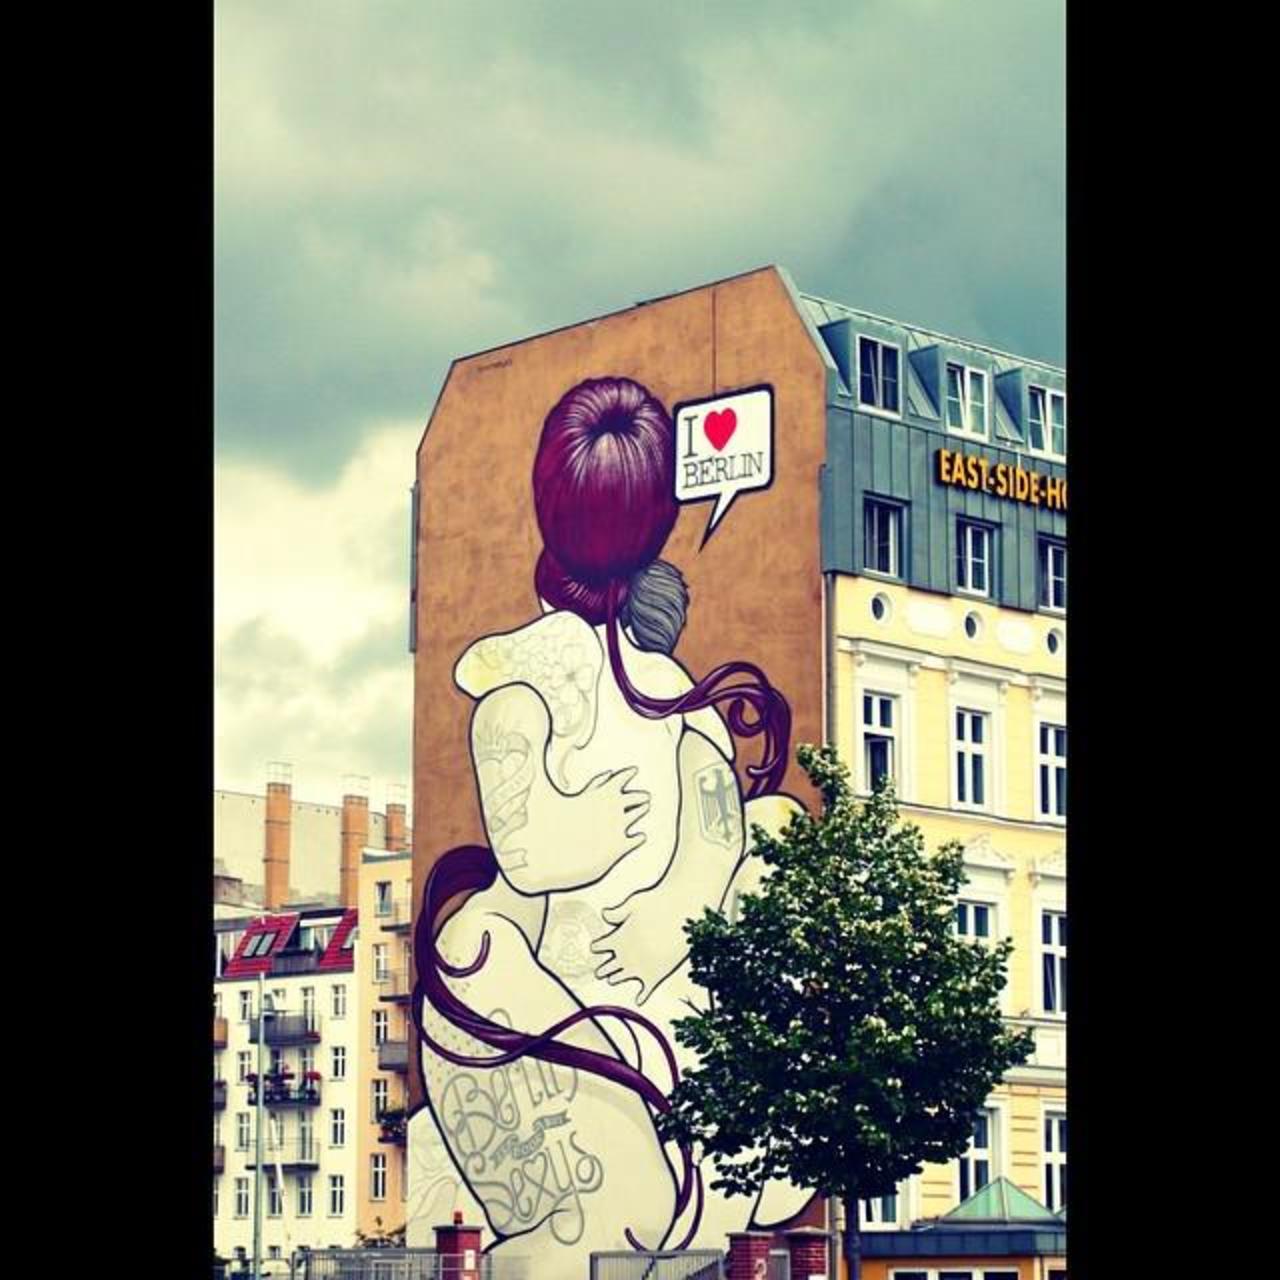 Art & architecture in Berlin. Join me! #berlin #streetart #germany #wall #art #graffiti #travel #discover #städtetr… http://t.co/Eyz2NMKct4